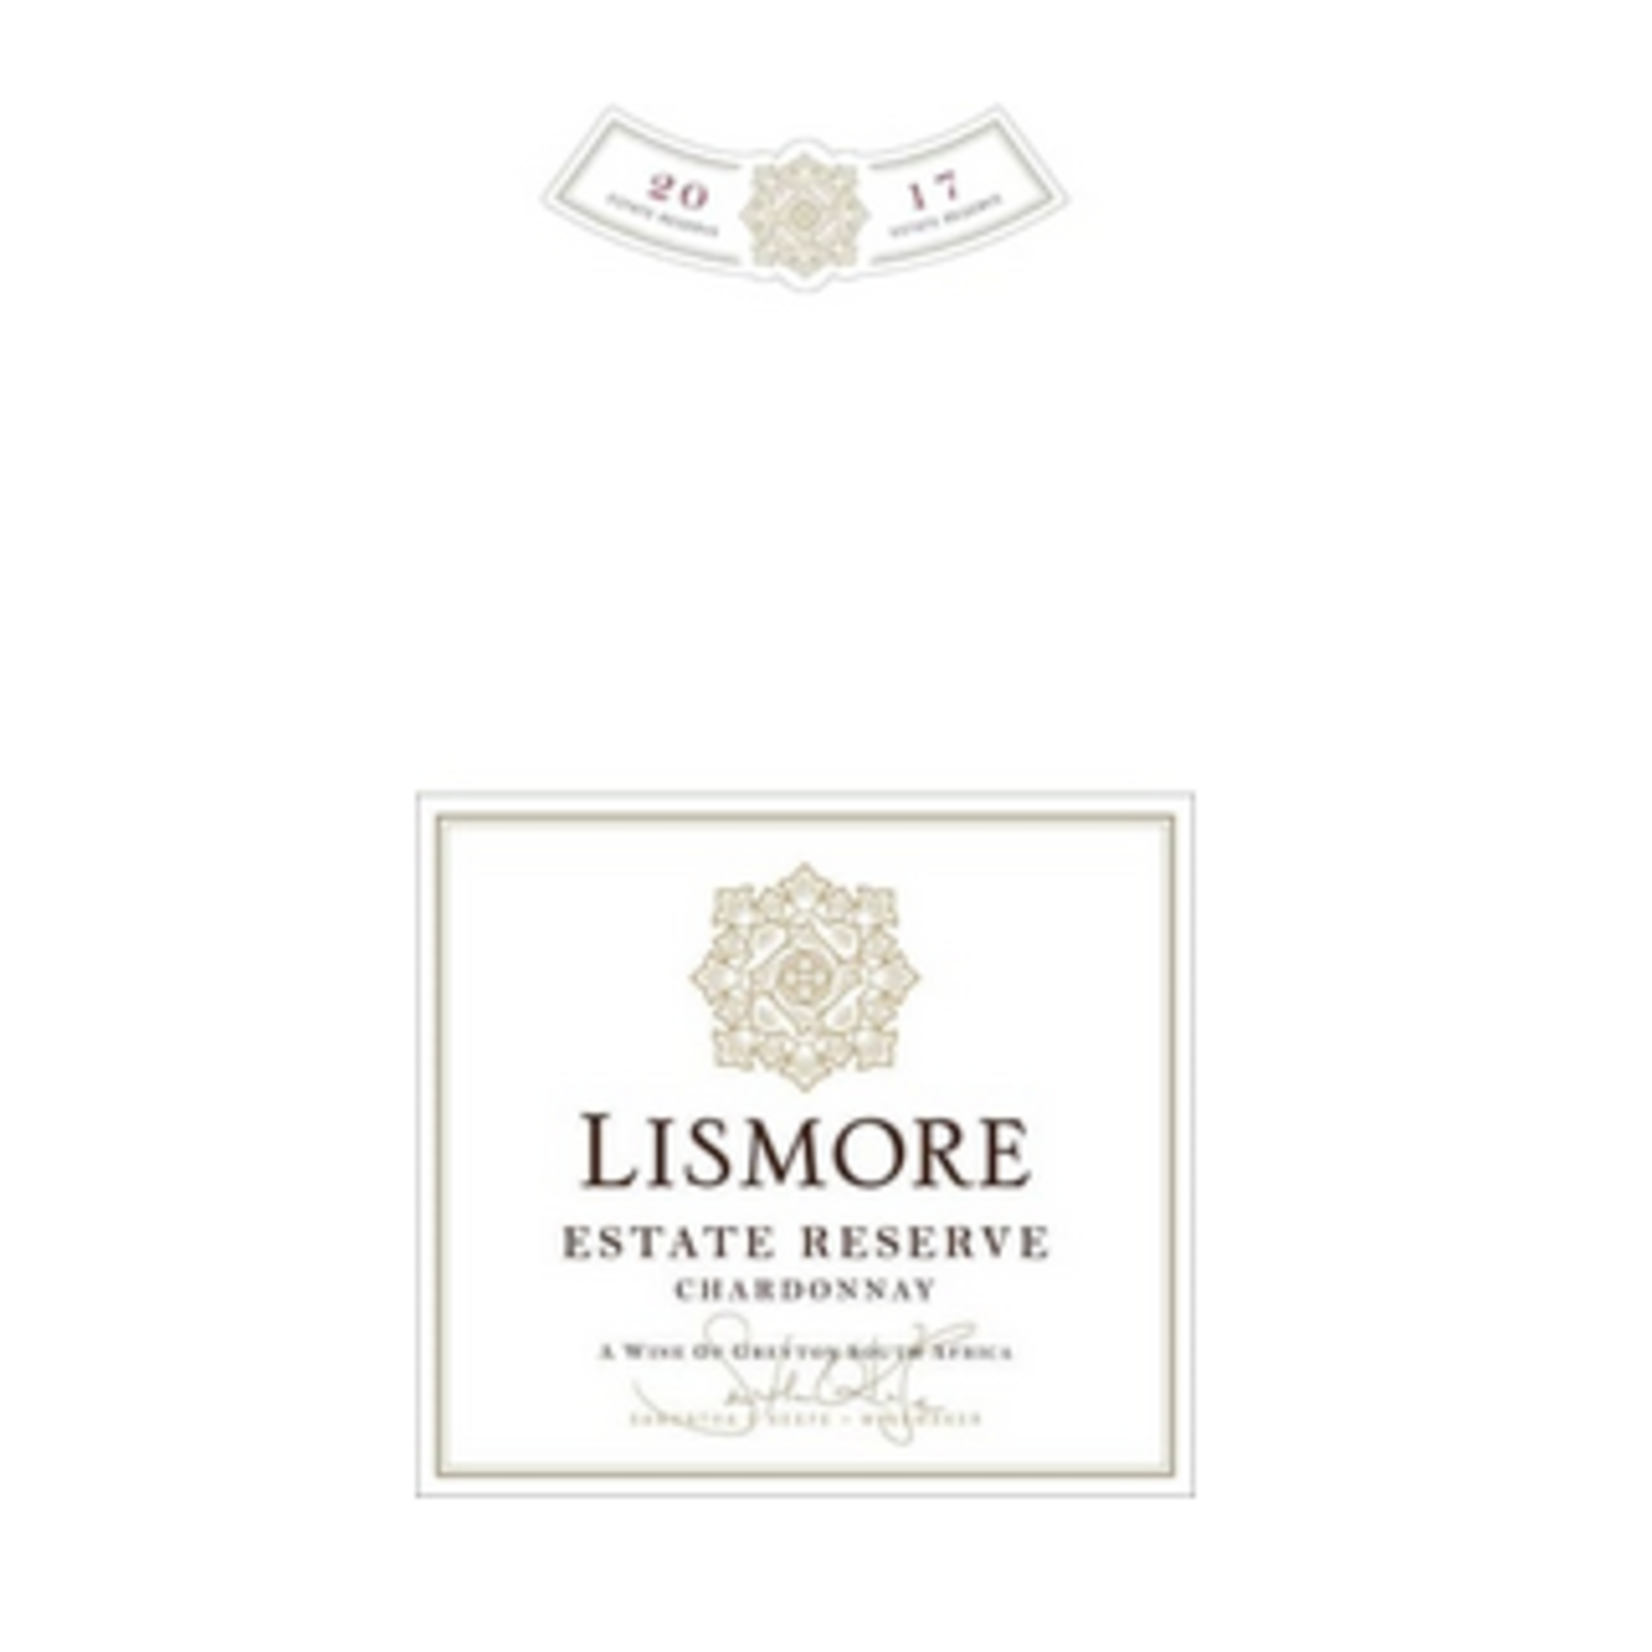 Lismore Estate Reserve Chardonnay 2017  South Africa